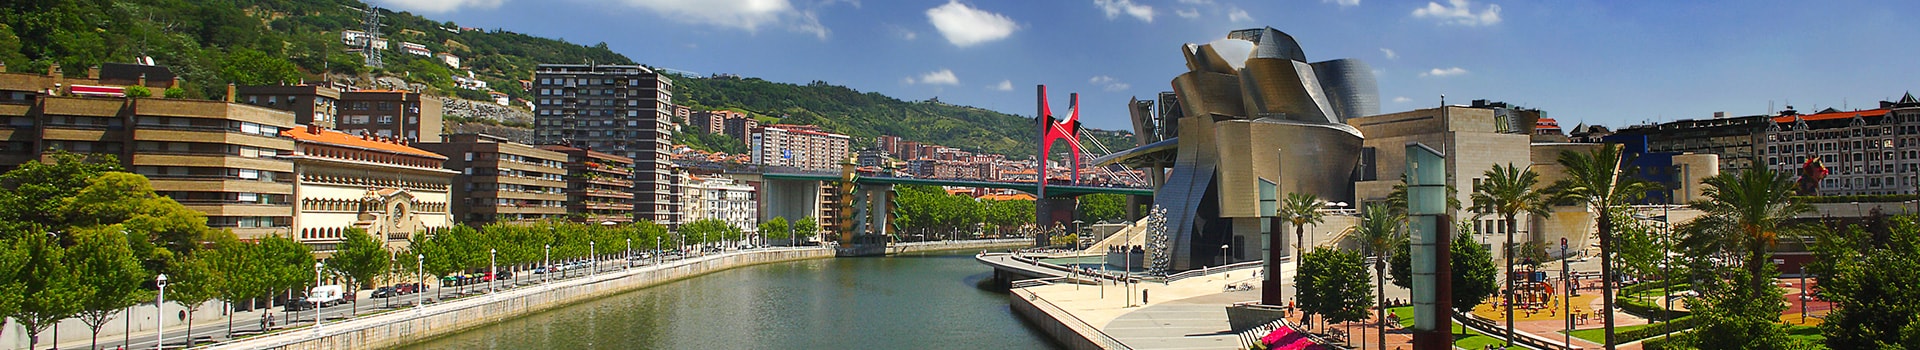 Rome - Bilbao